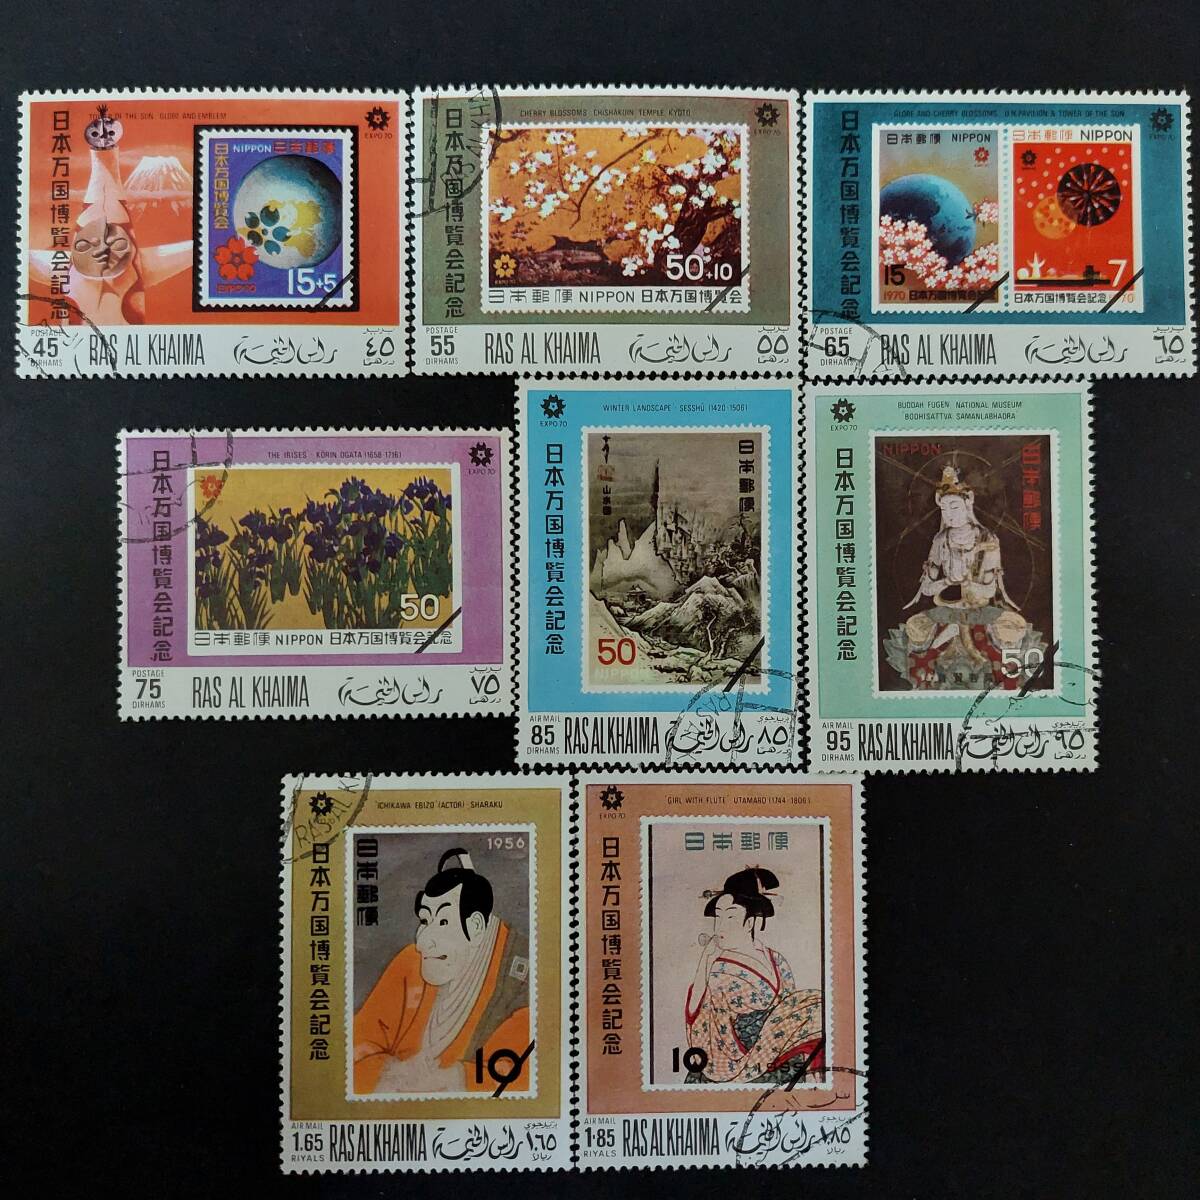 J579 ラス・アル・ハイマ（アラブ首長国連邦構成国）切手「1970年大阪万博記念切手:日本切手をデザインした切手8種完」1970年発行 使用済み_画像1